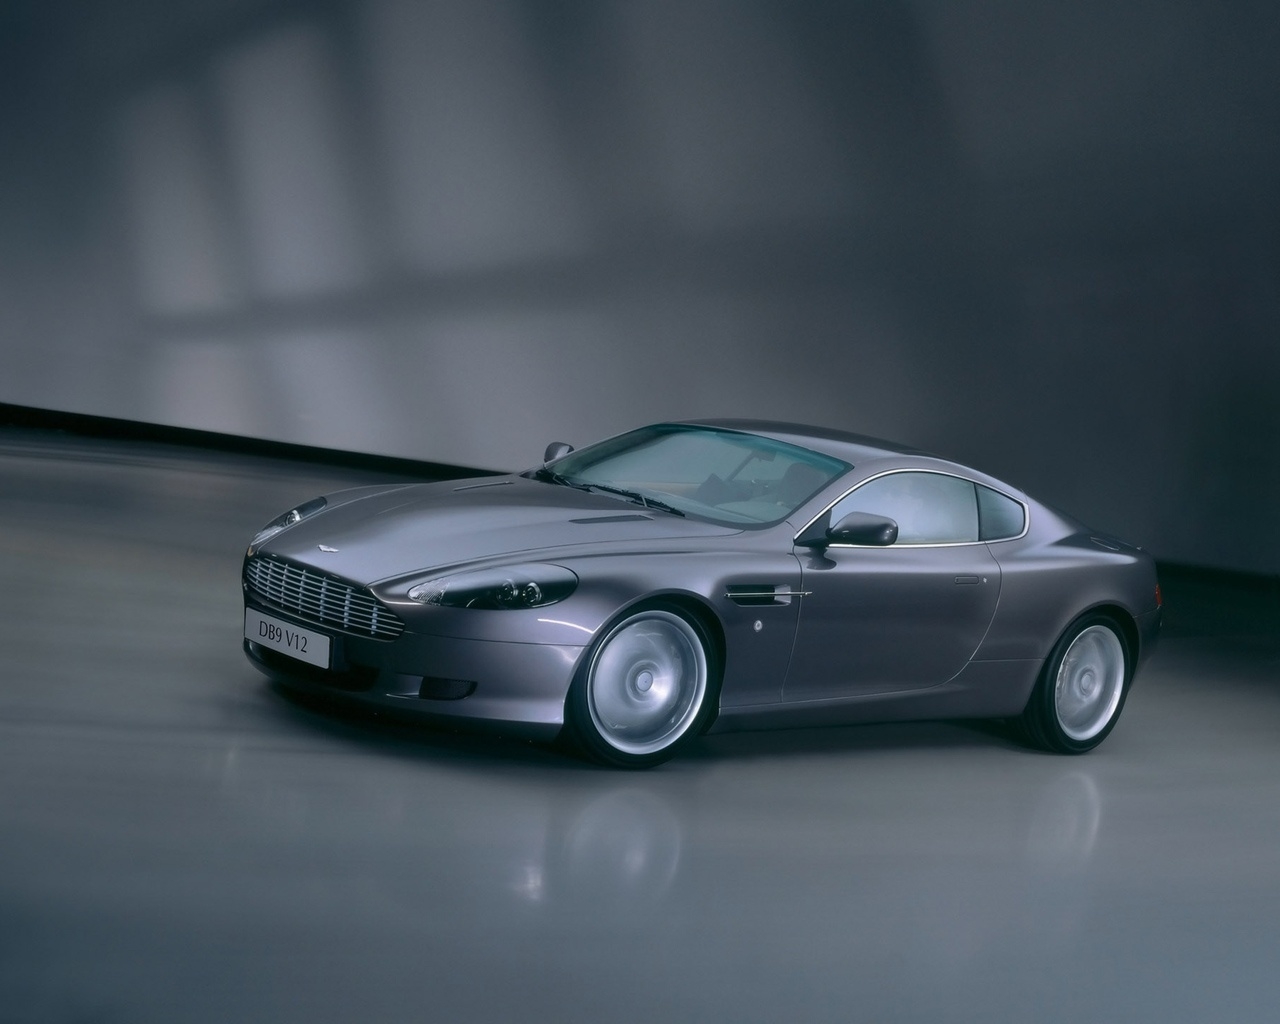 Aston Martin DB9 Speed for 1280 x 1024 resolution